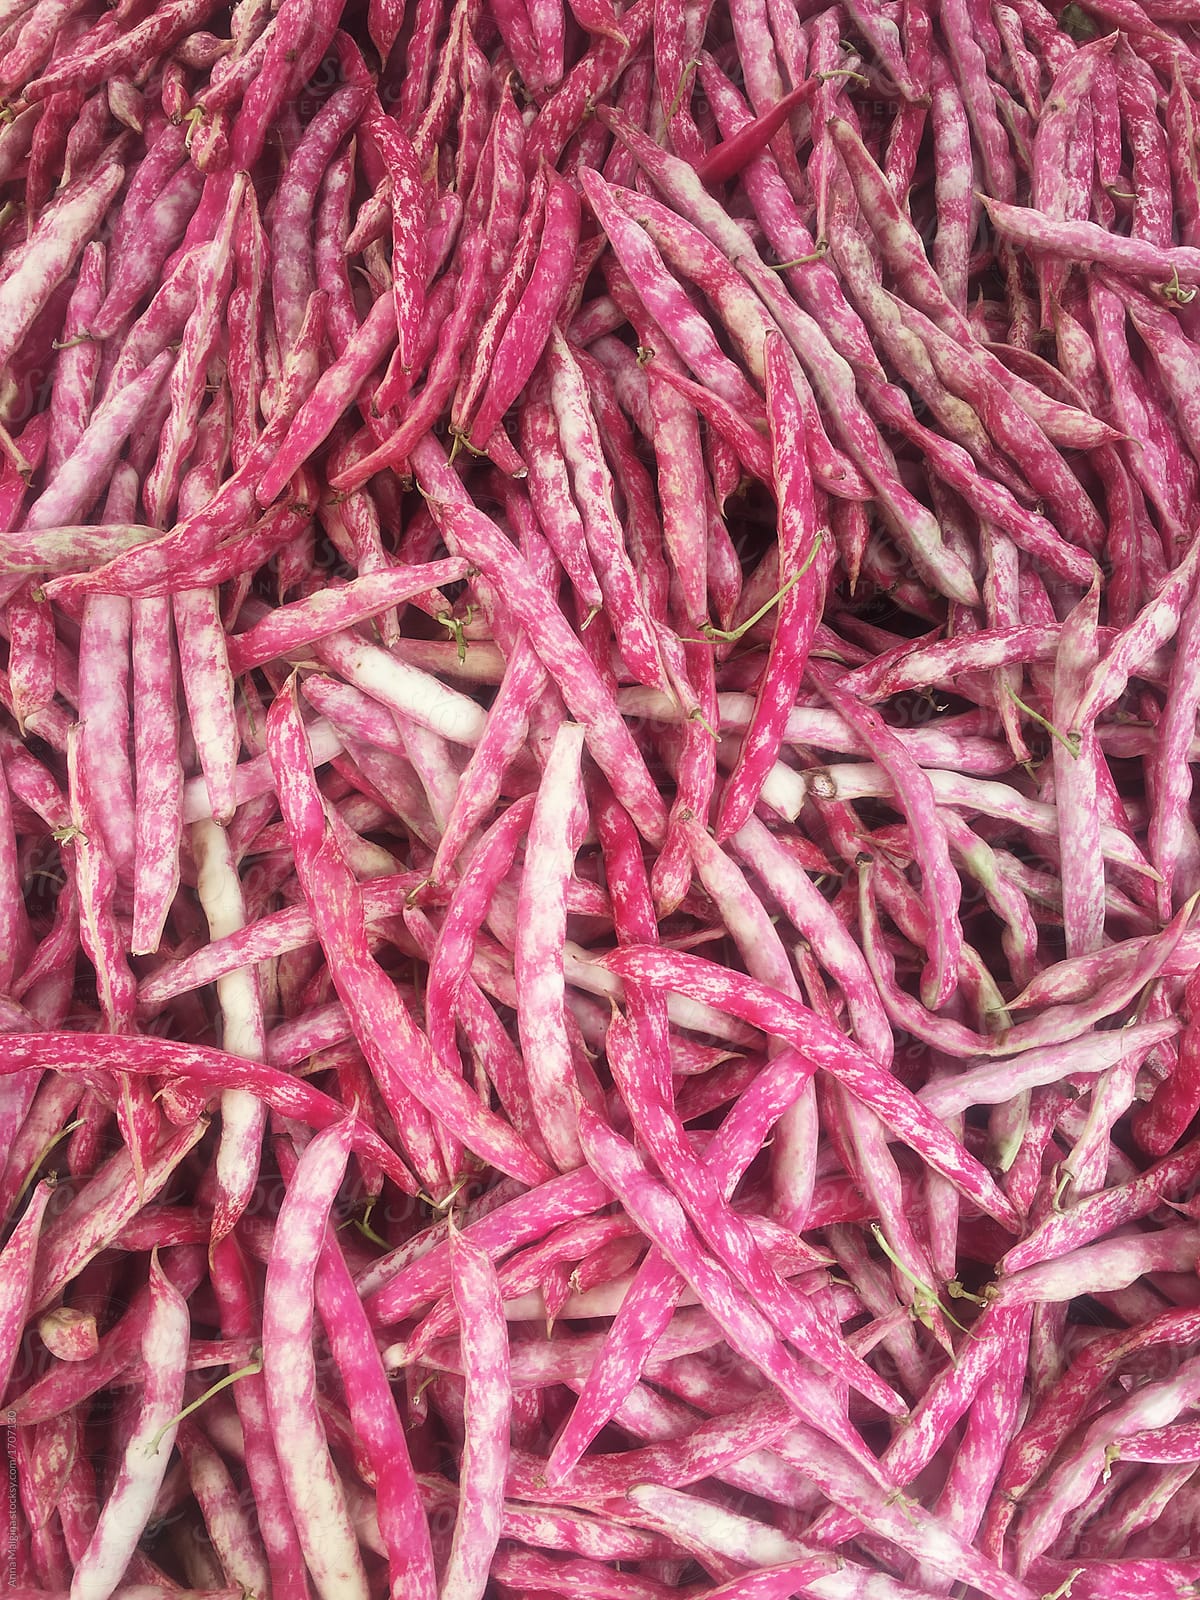 Pink beans